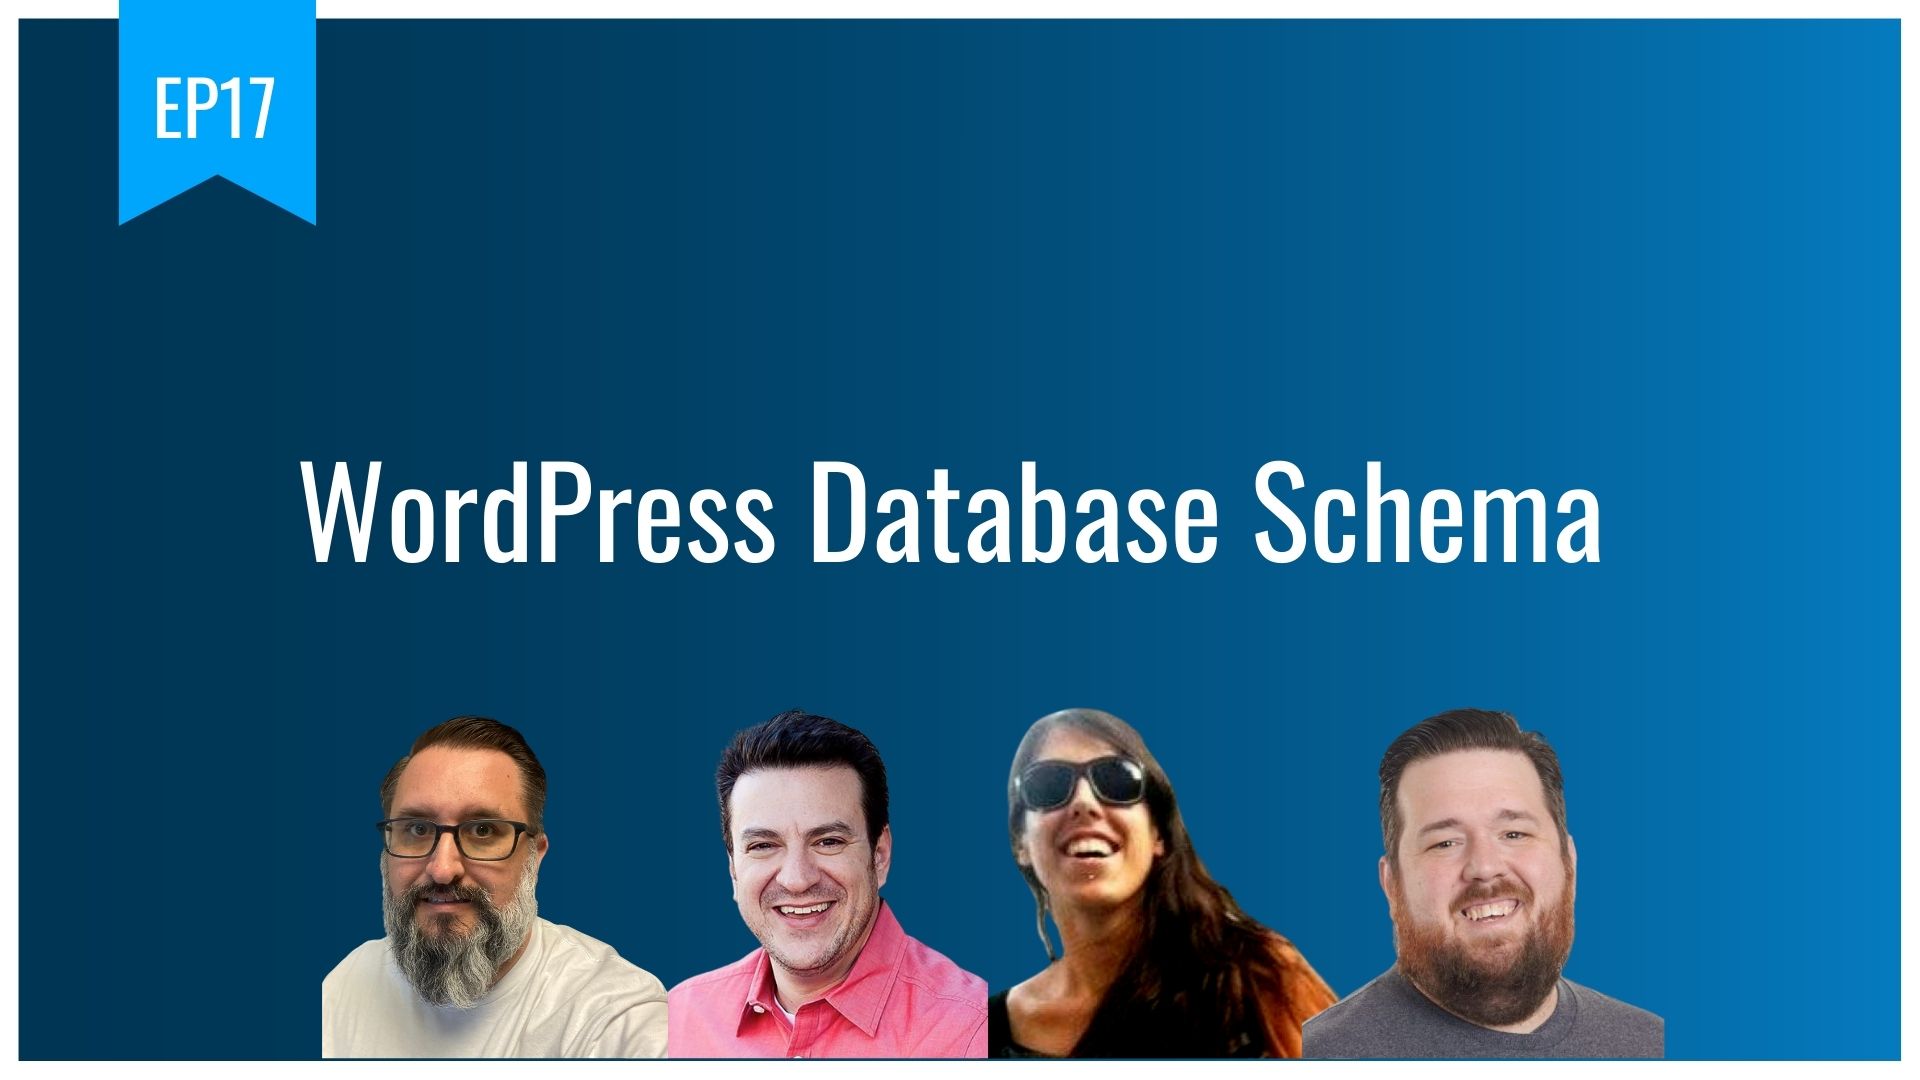 EP17 – WordPress Database Schema